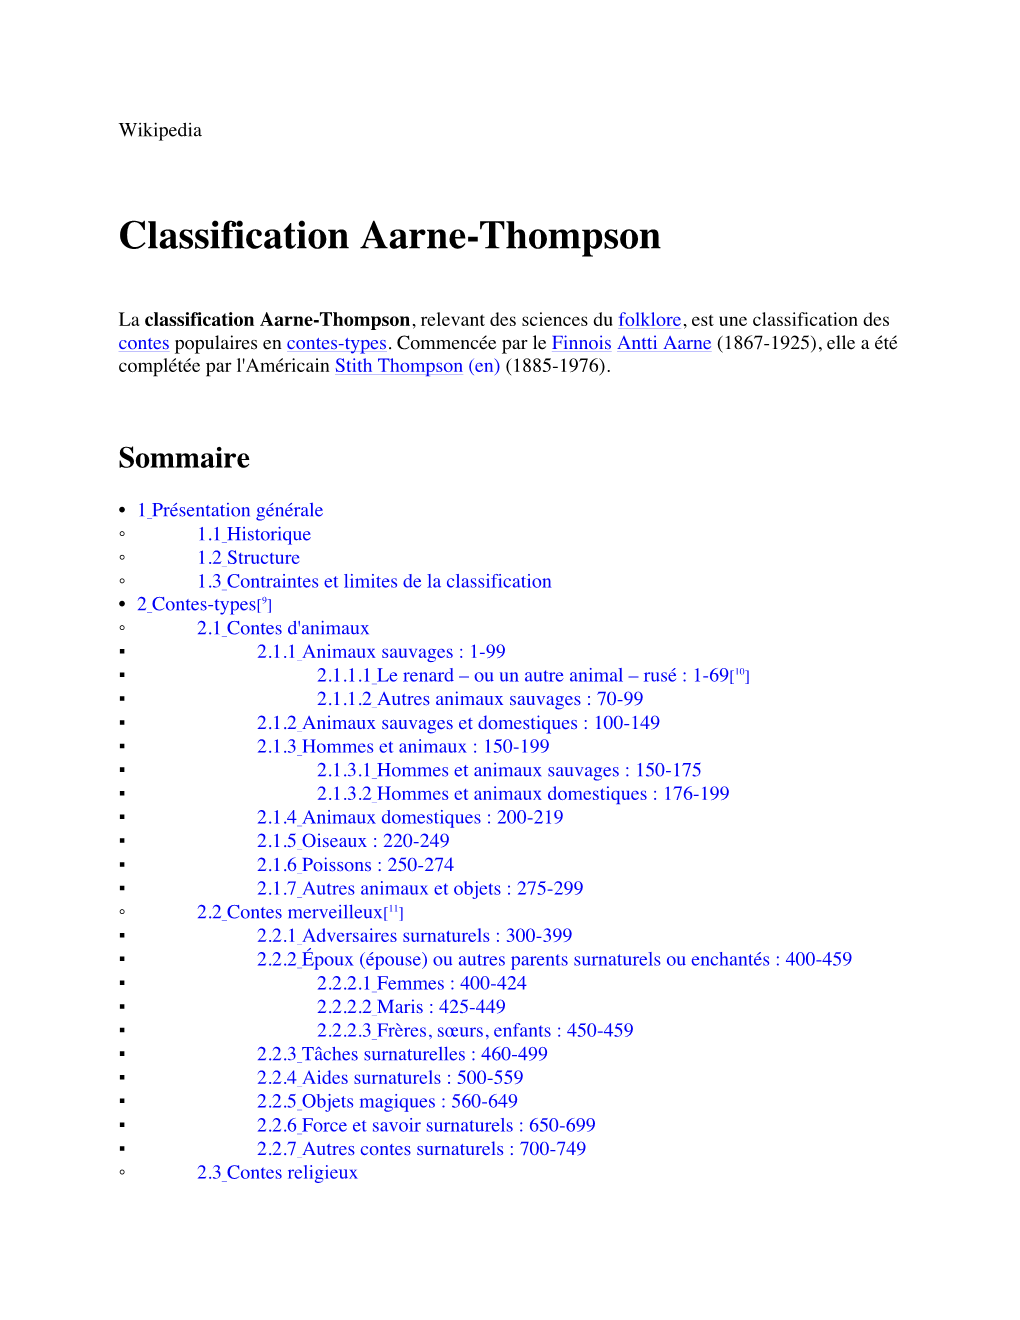 Classification Aarne-Thompson